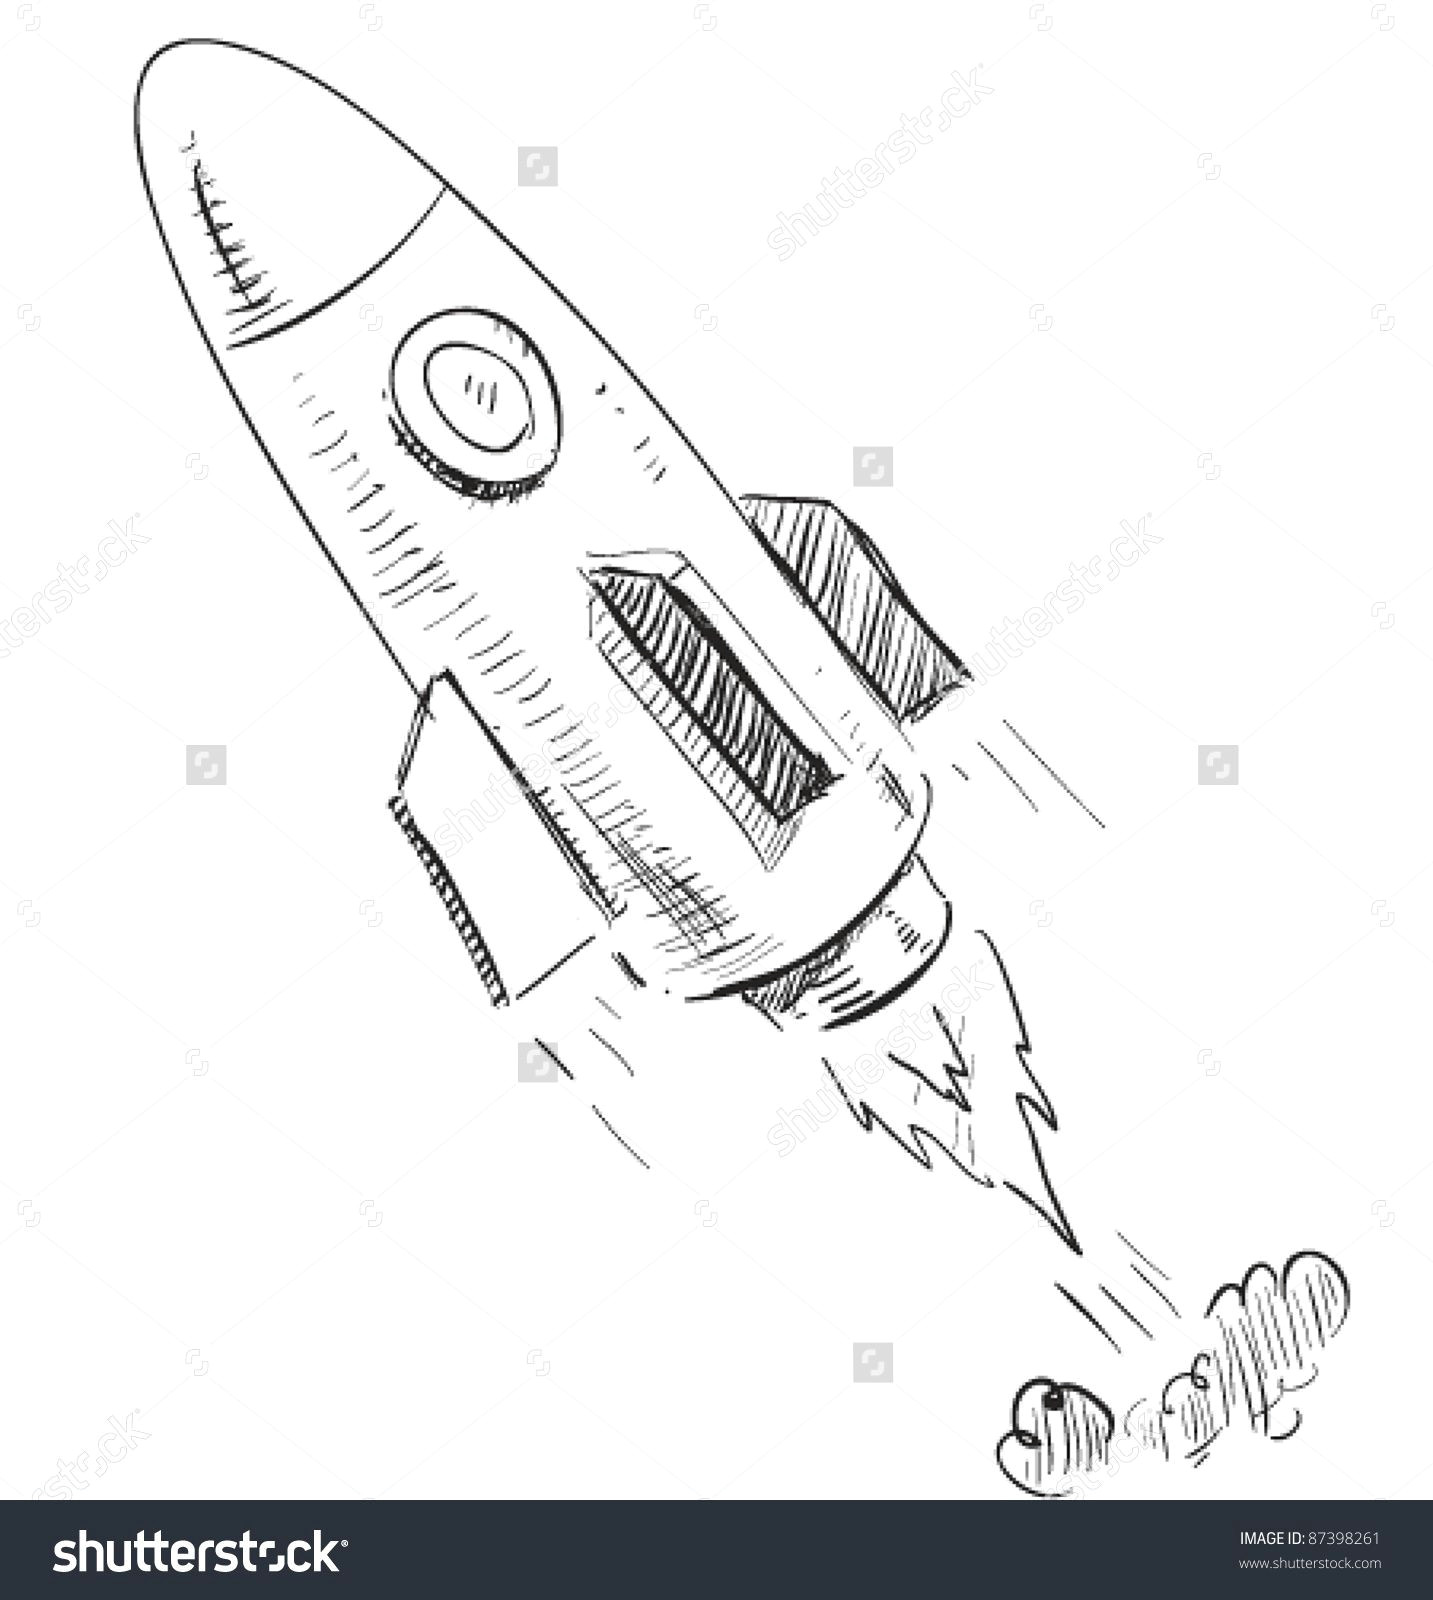 Easy Drawings Rocket Easy to Draw Microscope soaring Rocket Ship Cartoon Icon Sketch Fast